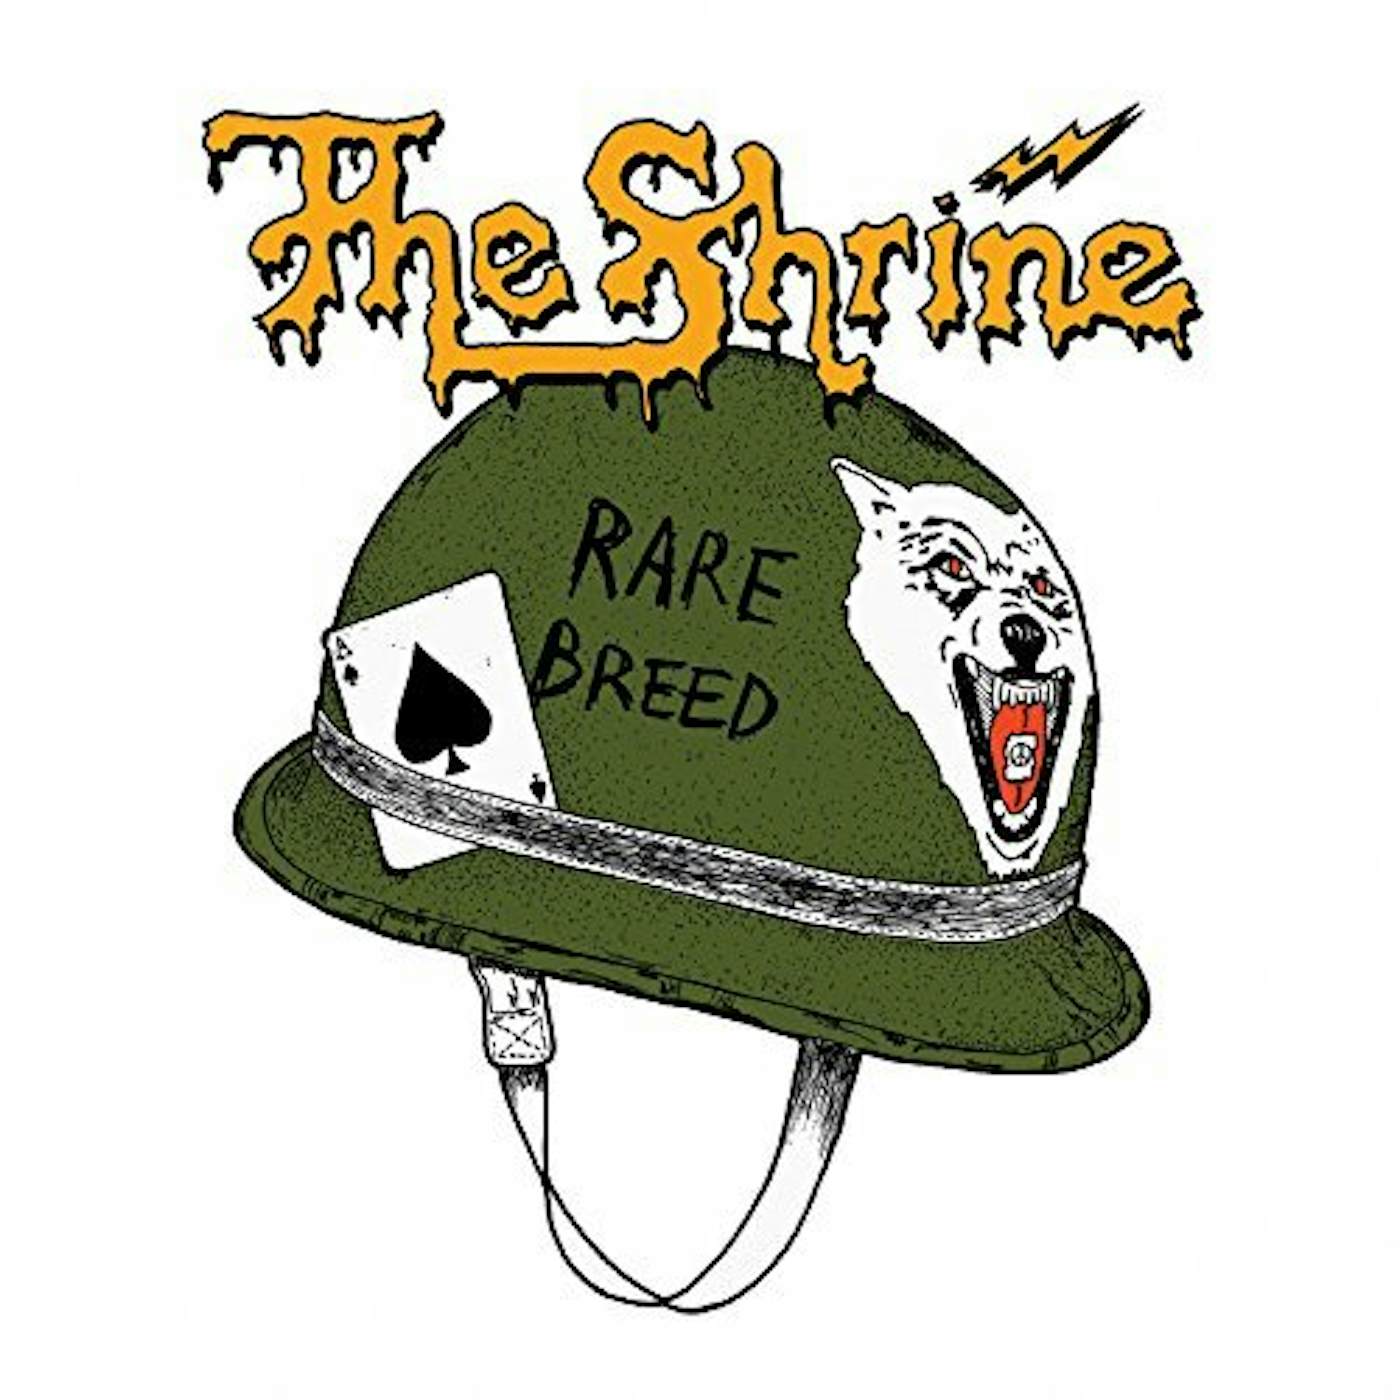 The Shrine Rare Breed Vinyl Record